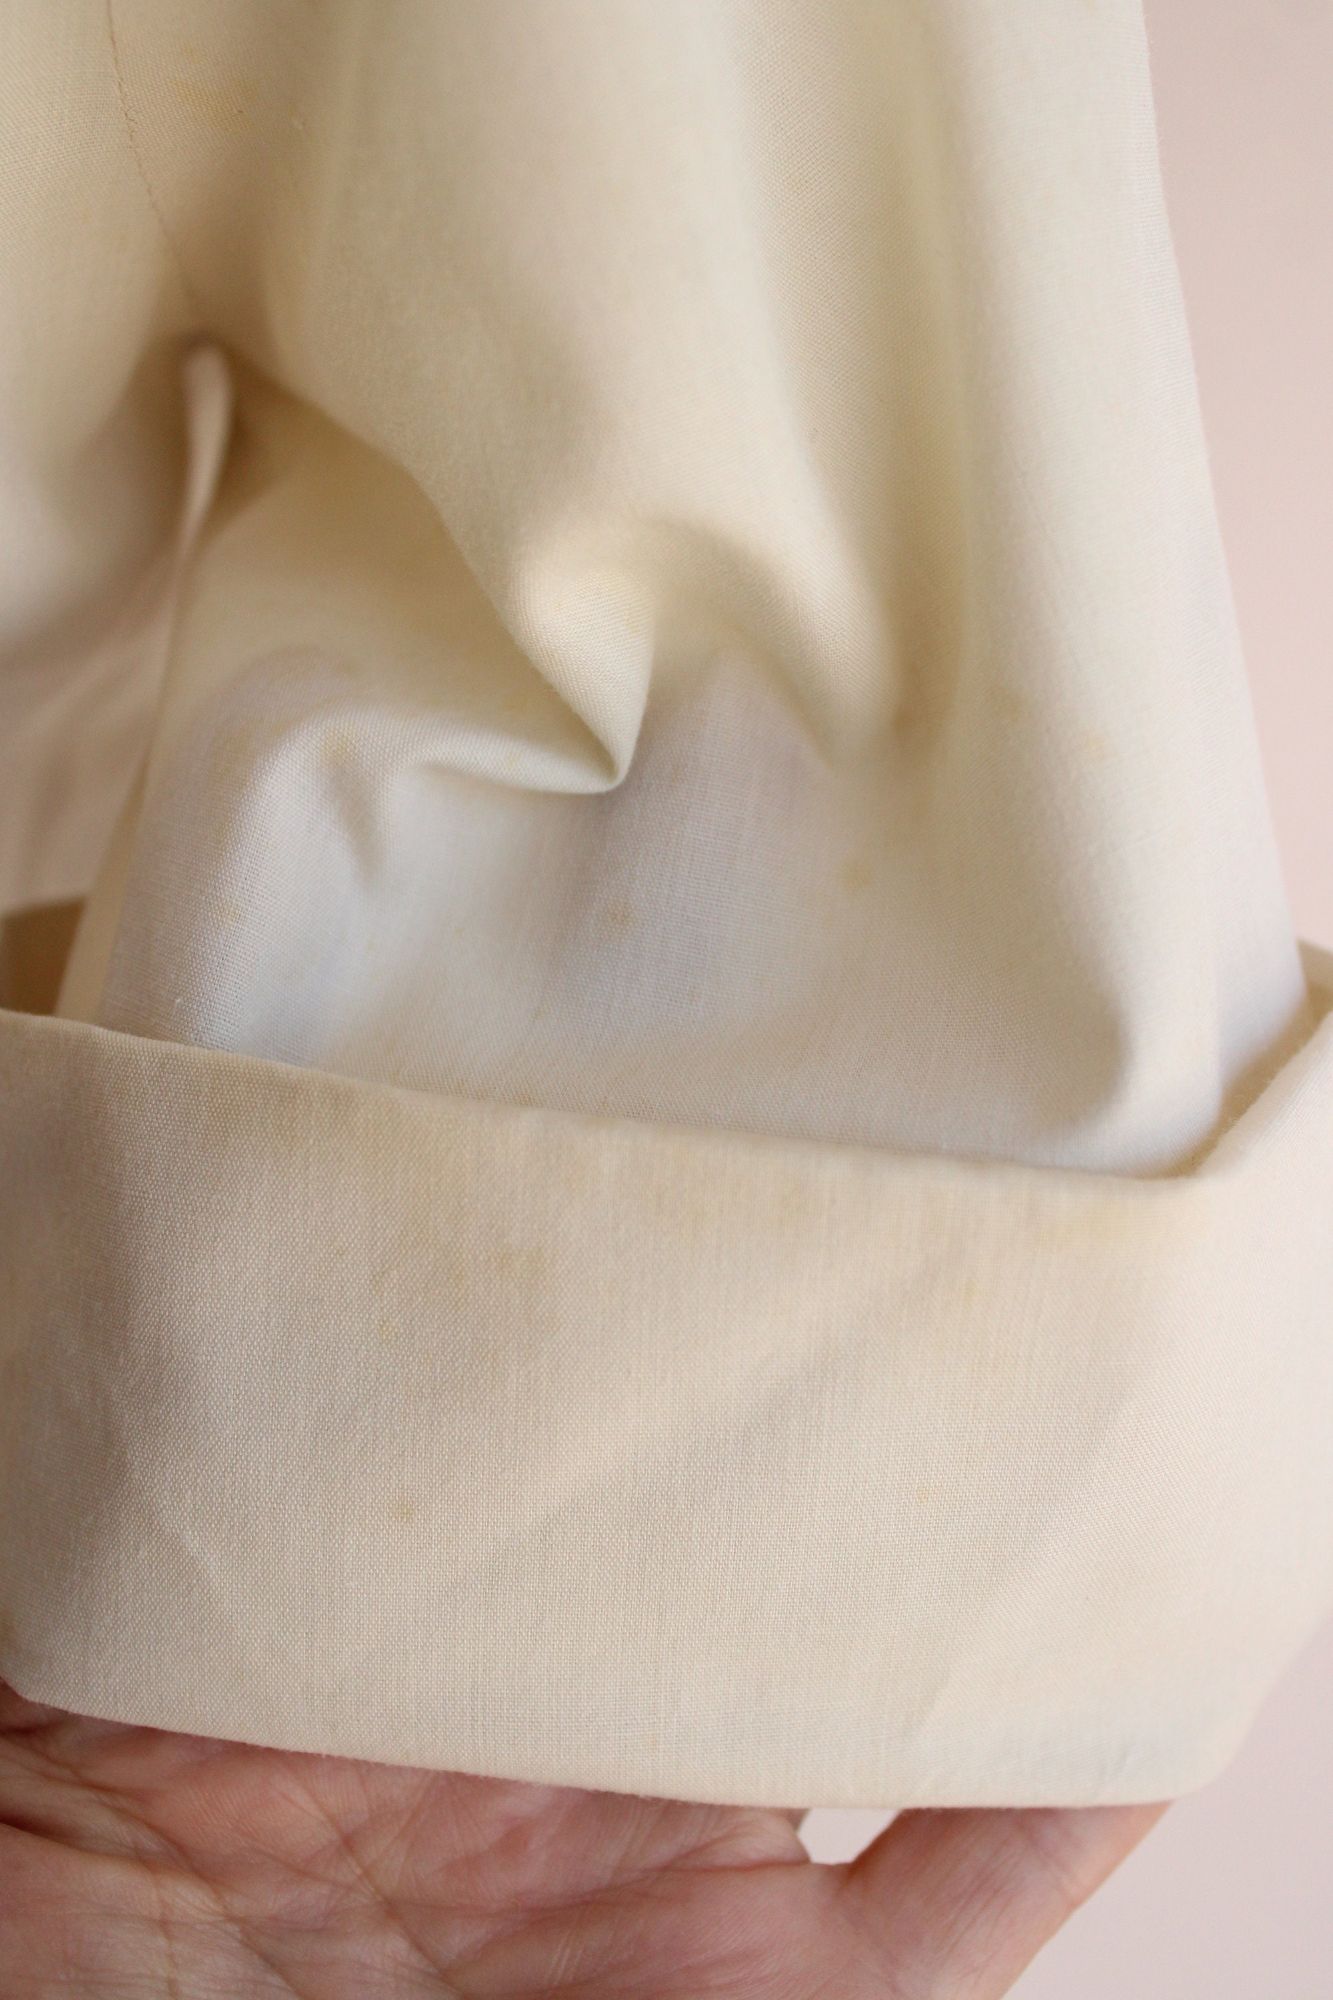 Vintage 1950s Westbury Fashions Cream Cotton Shirtwaist Dress